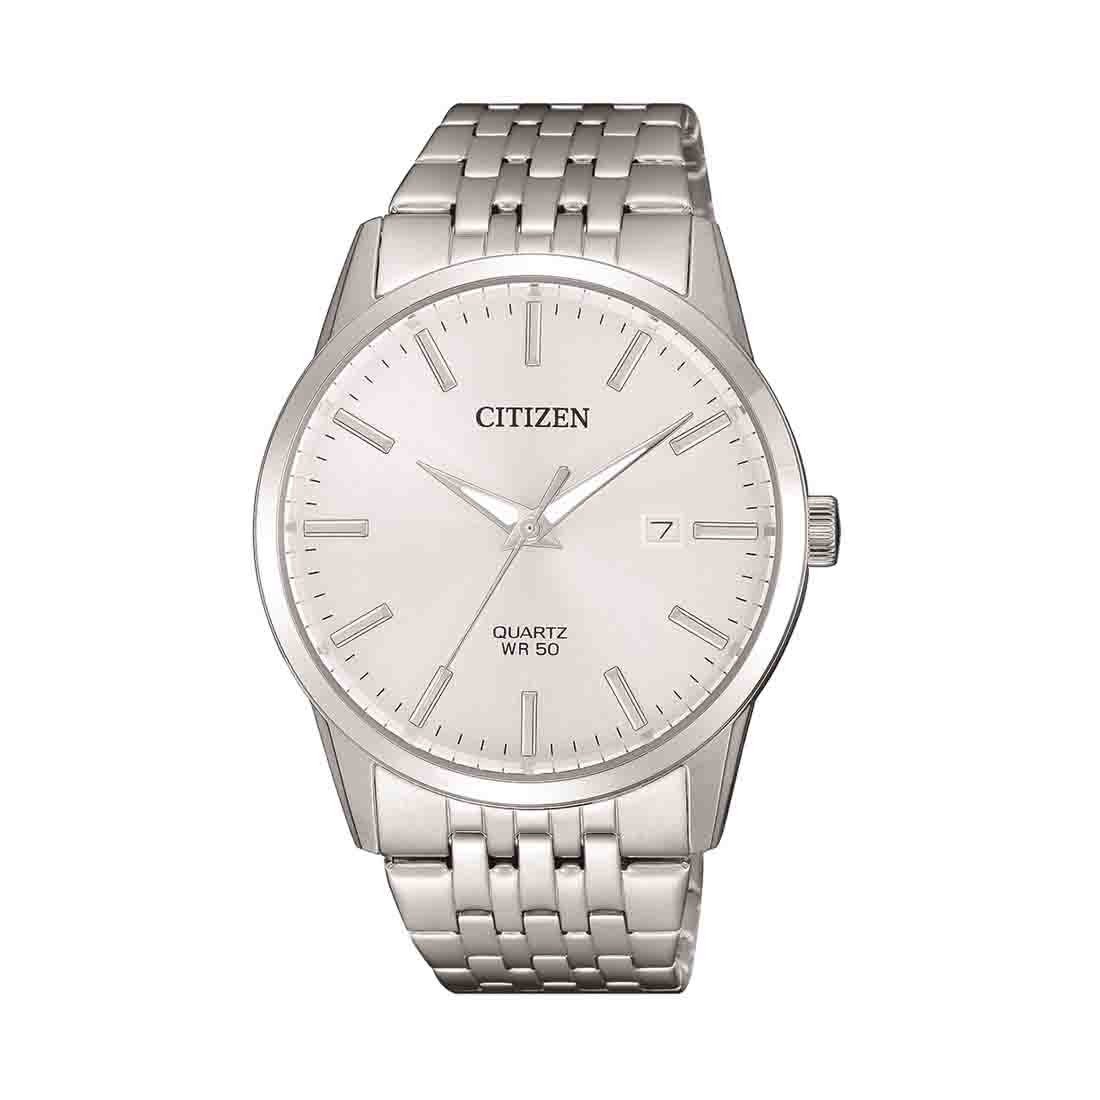 Citizen Men's Silver Stainless-Steel White Face Watch Model BI5000-87A Watches Citizen 